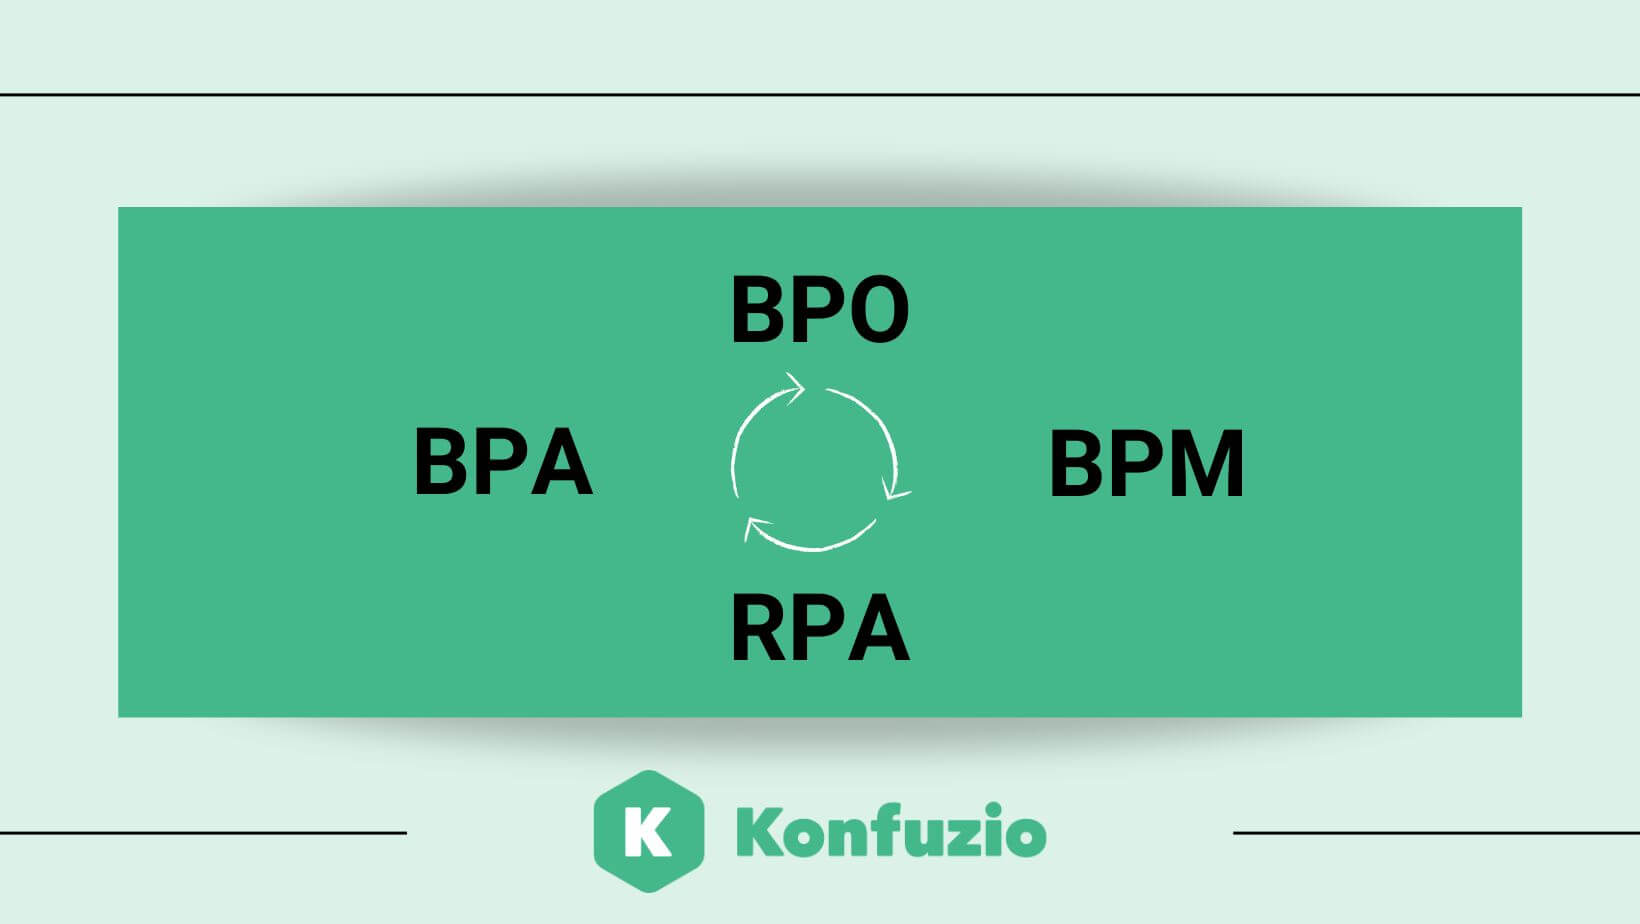 BPA Software BPO BPM RPA sobre fondo verde